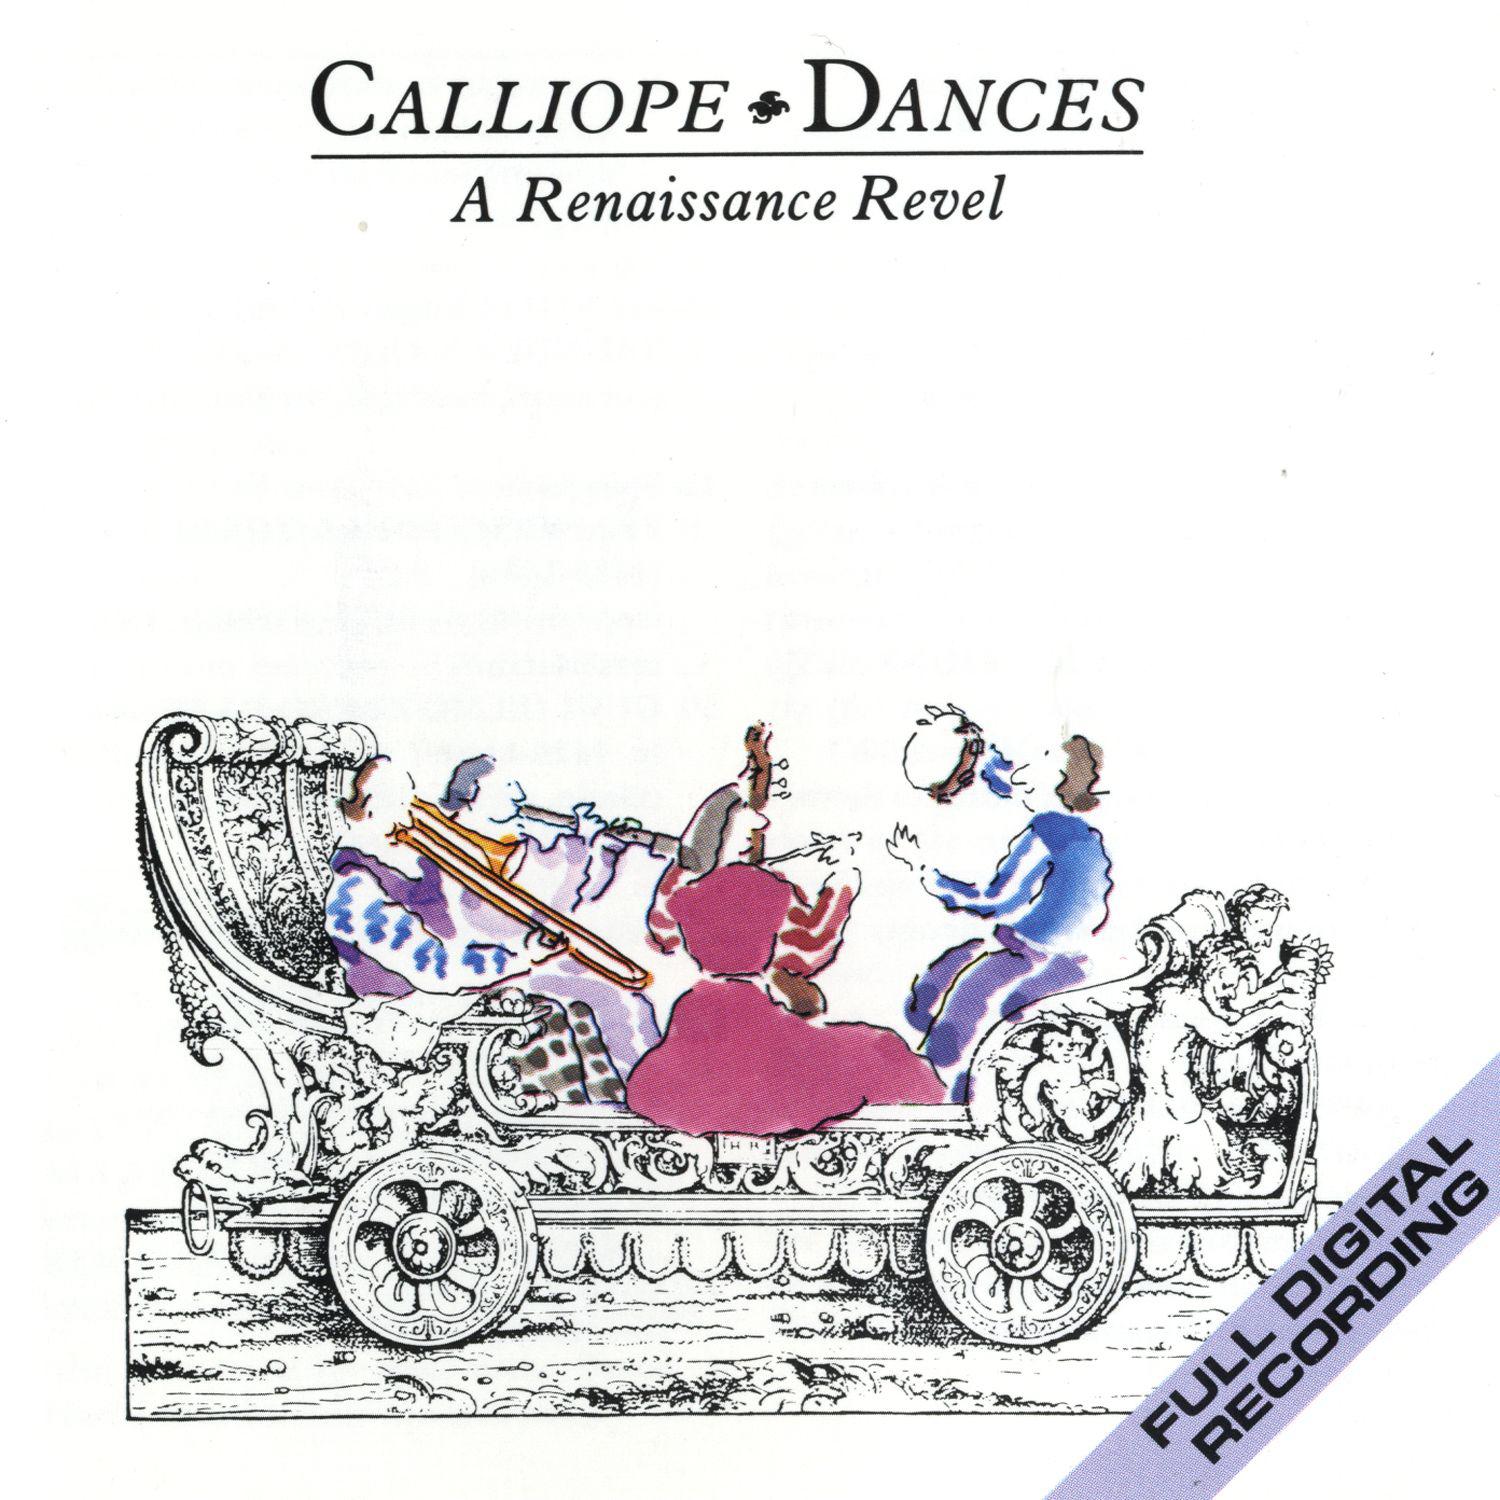 Sixteenth Century French Dances: Two Galliardes